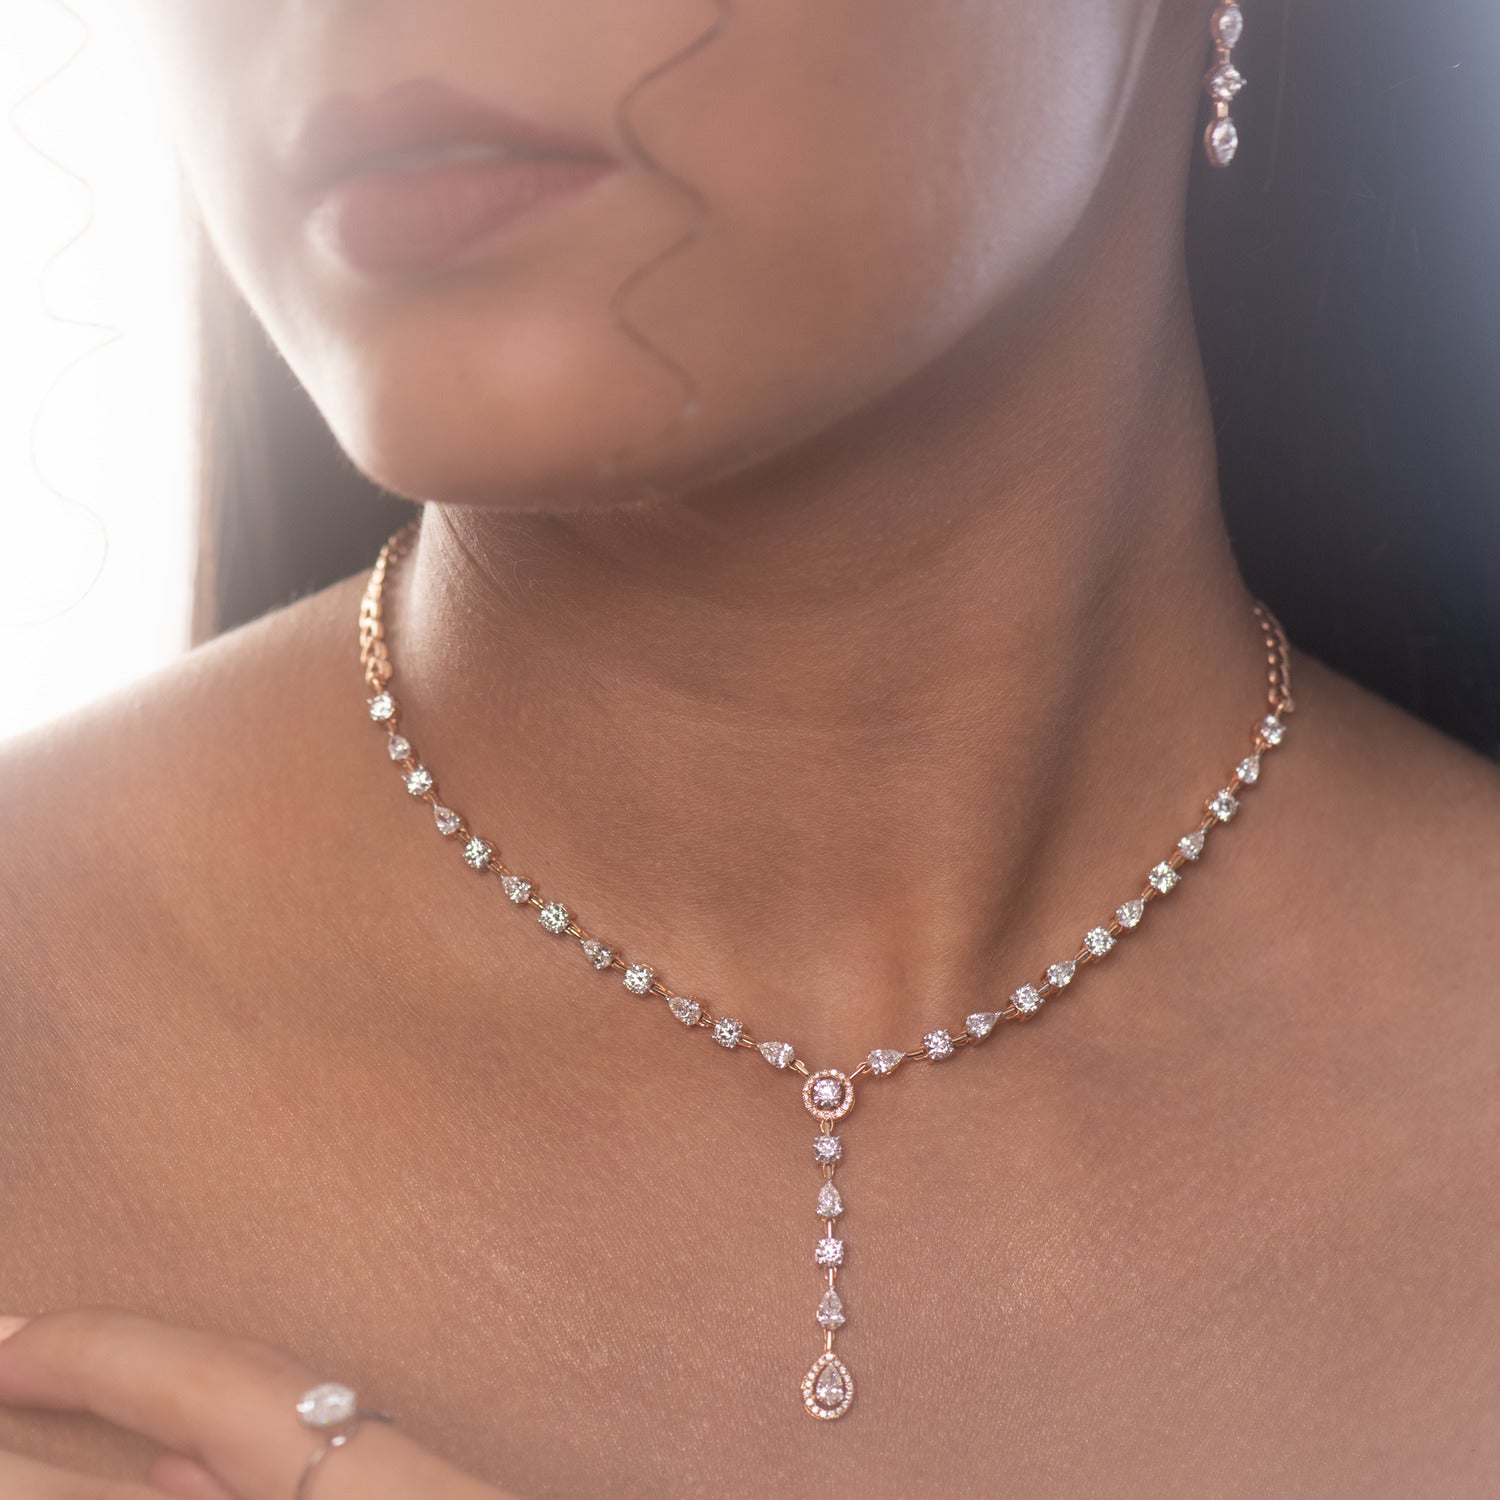 women wearing Stellar solitaire drop necklace 